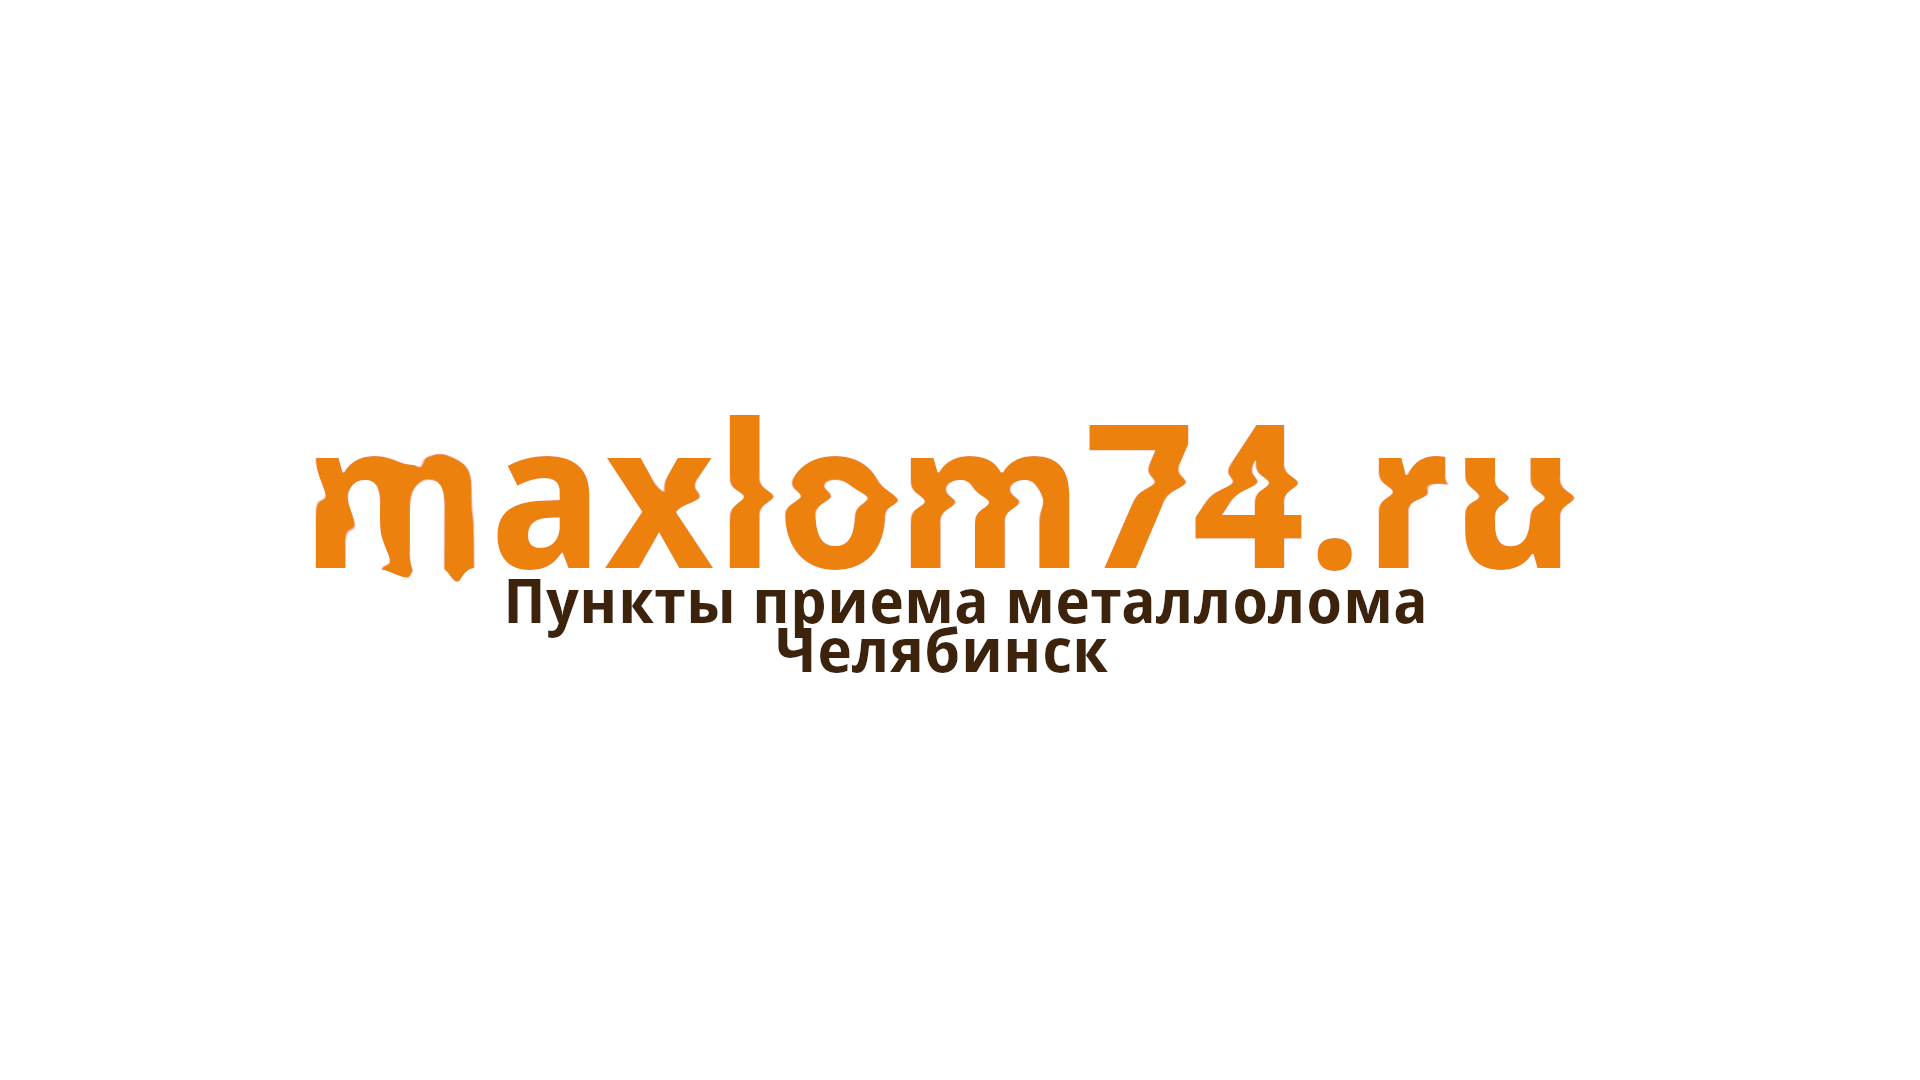 maxlom74.ru - Прием металлолома